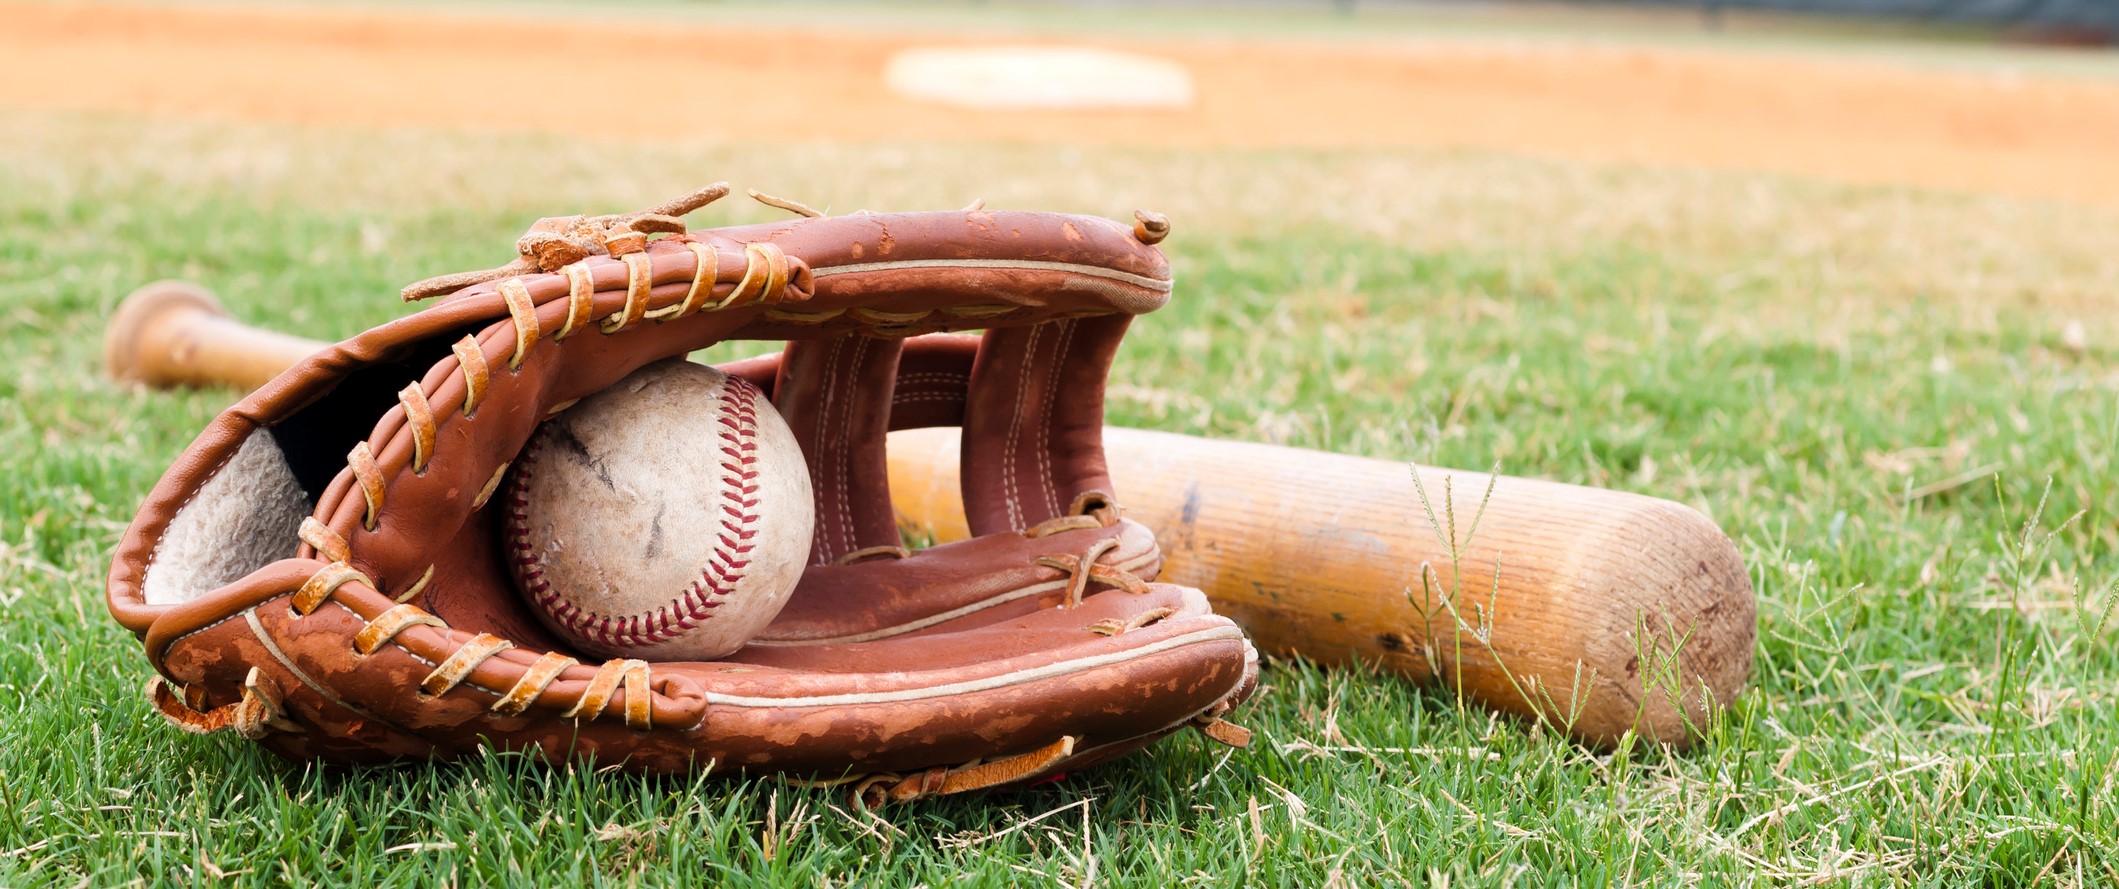 Old Baseball, Glove, and Bat on Field